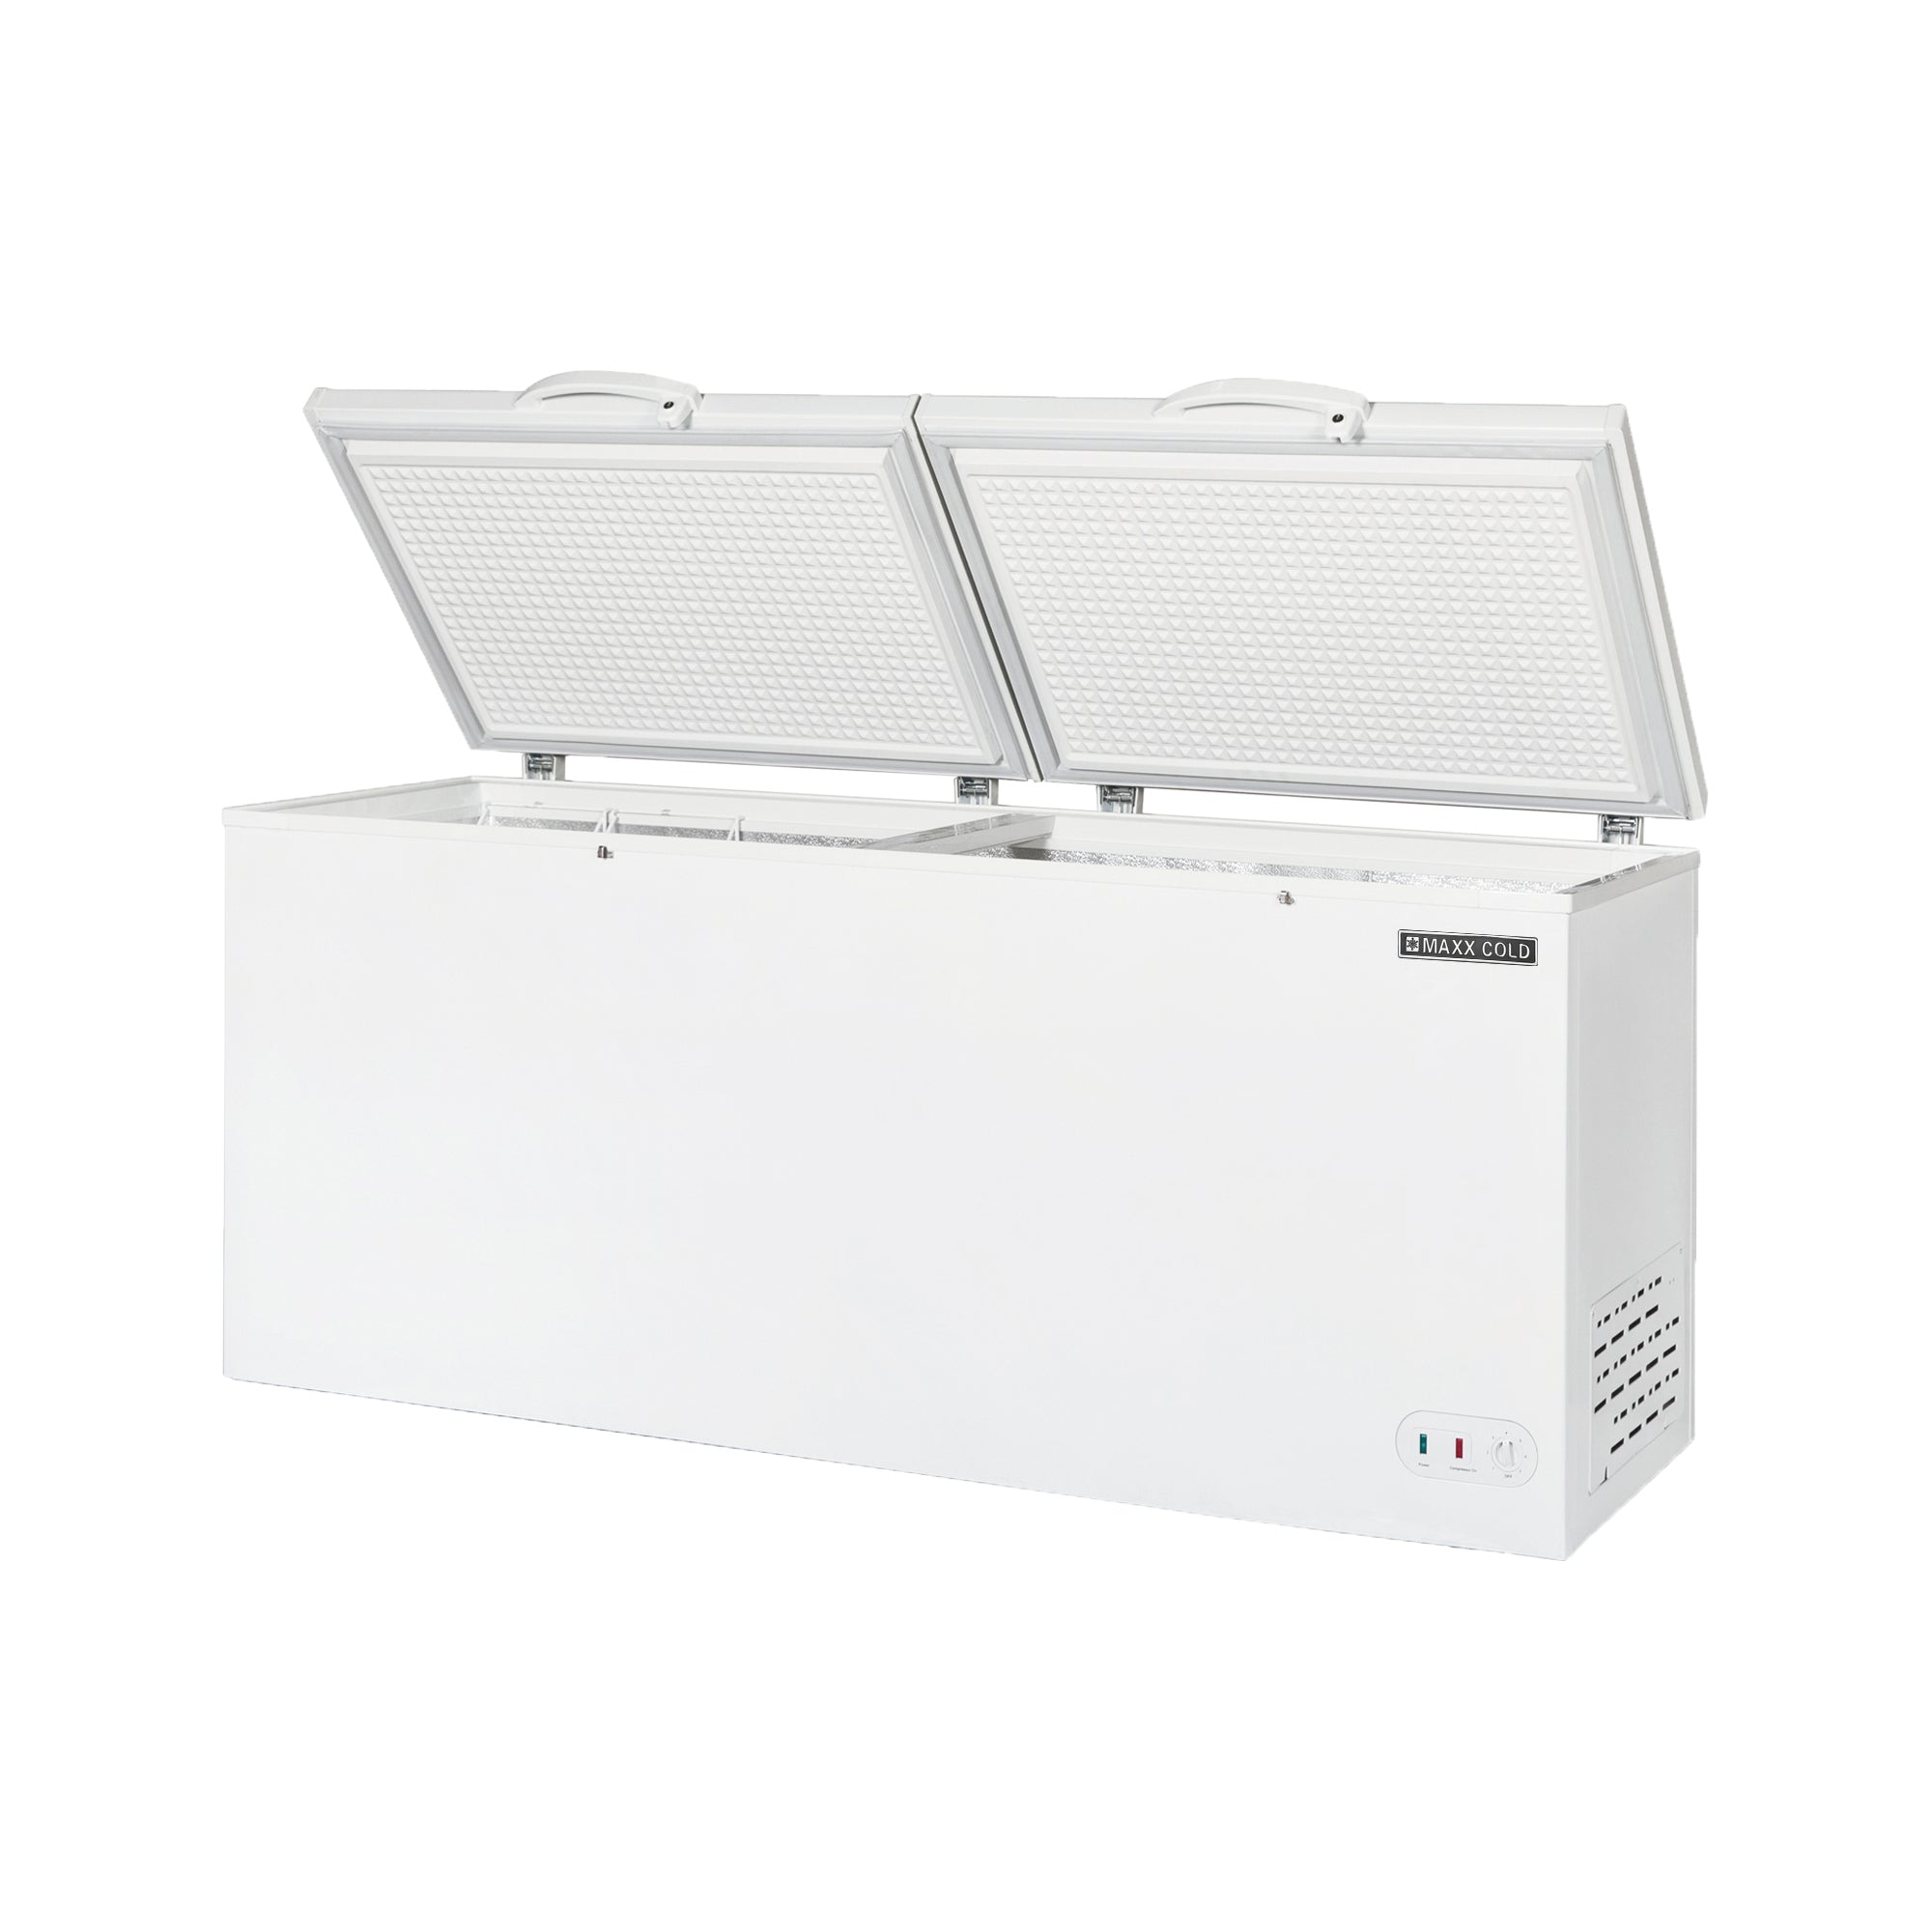 Maxx Cold - MXSH23.6SHC, Maxx Cold Extra Large Chest Freezer with Split Top, 79"W, 23.6 cu ft. Storage Capacity, Locking Lids, Garage Ready, in White